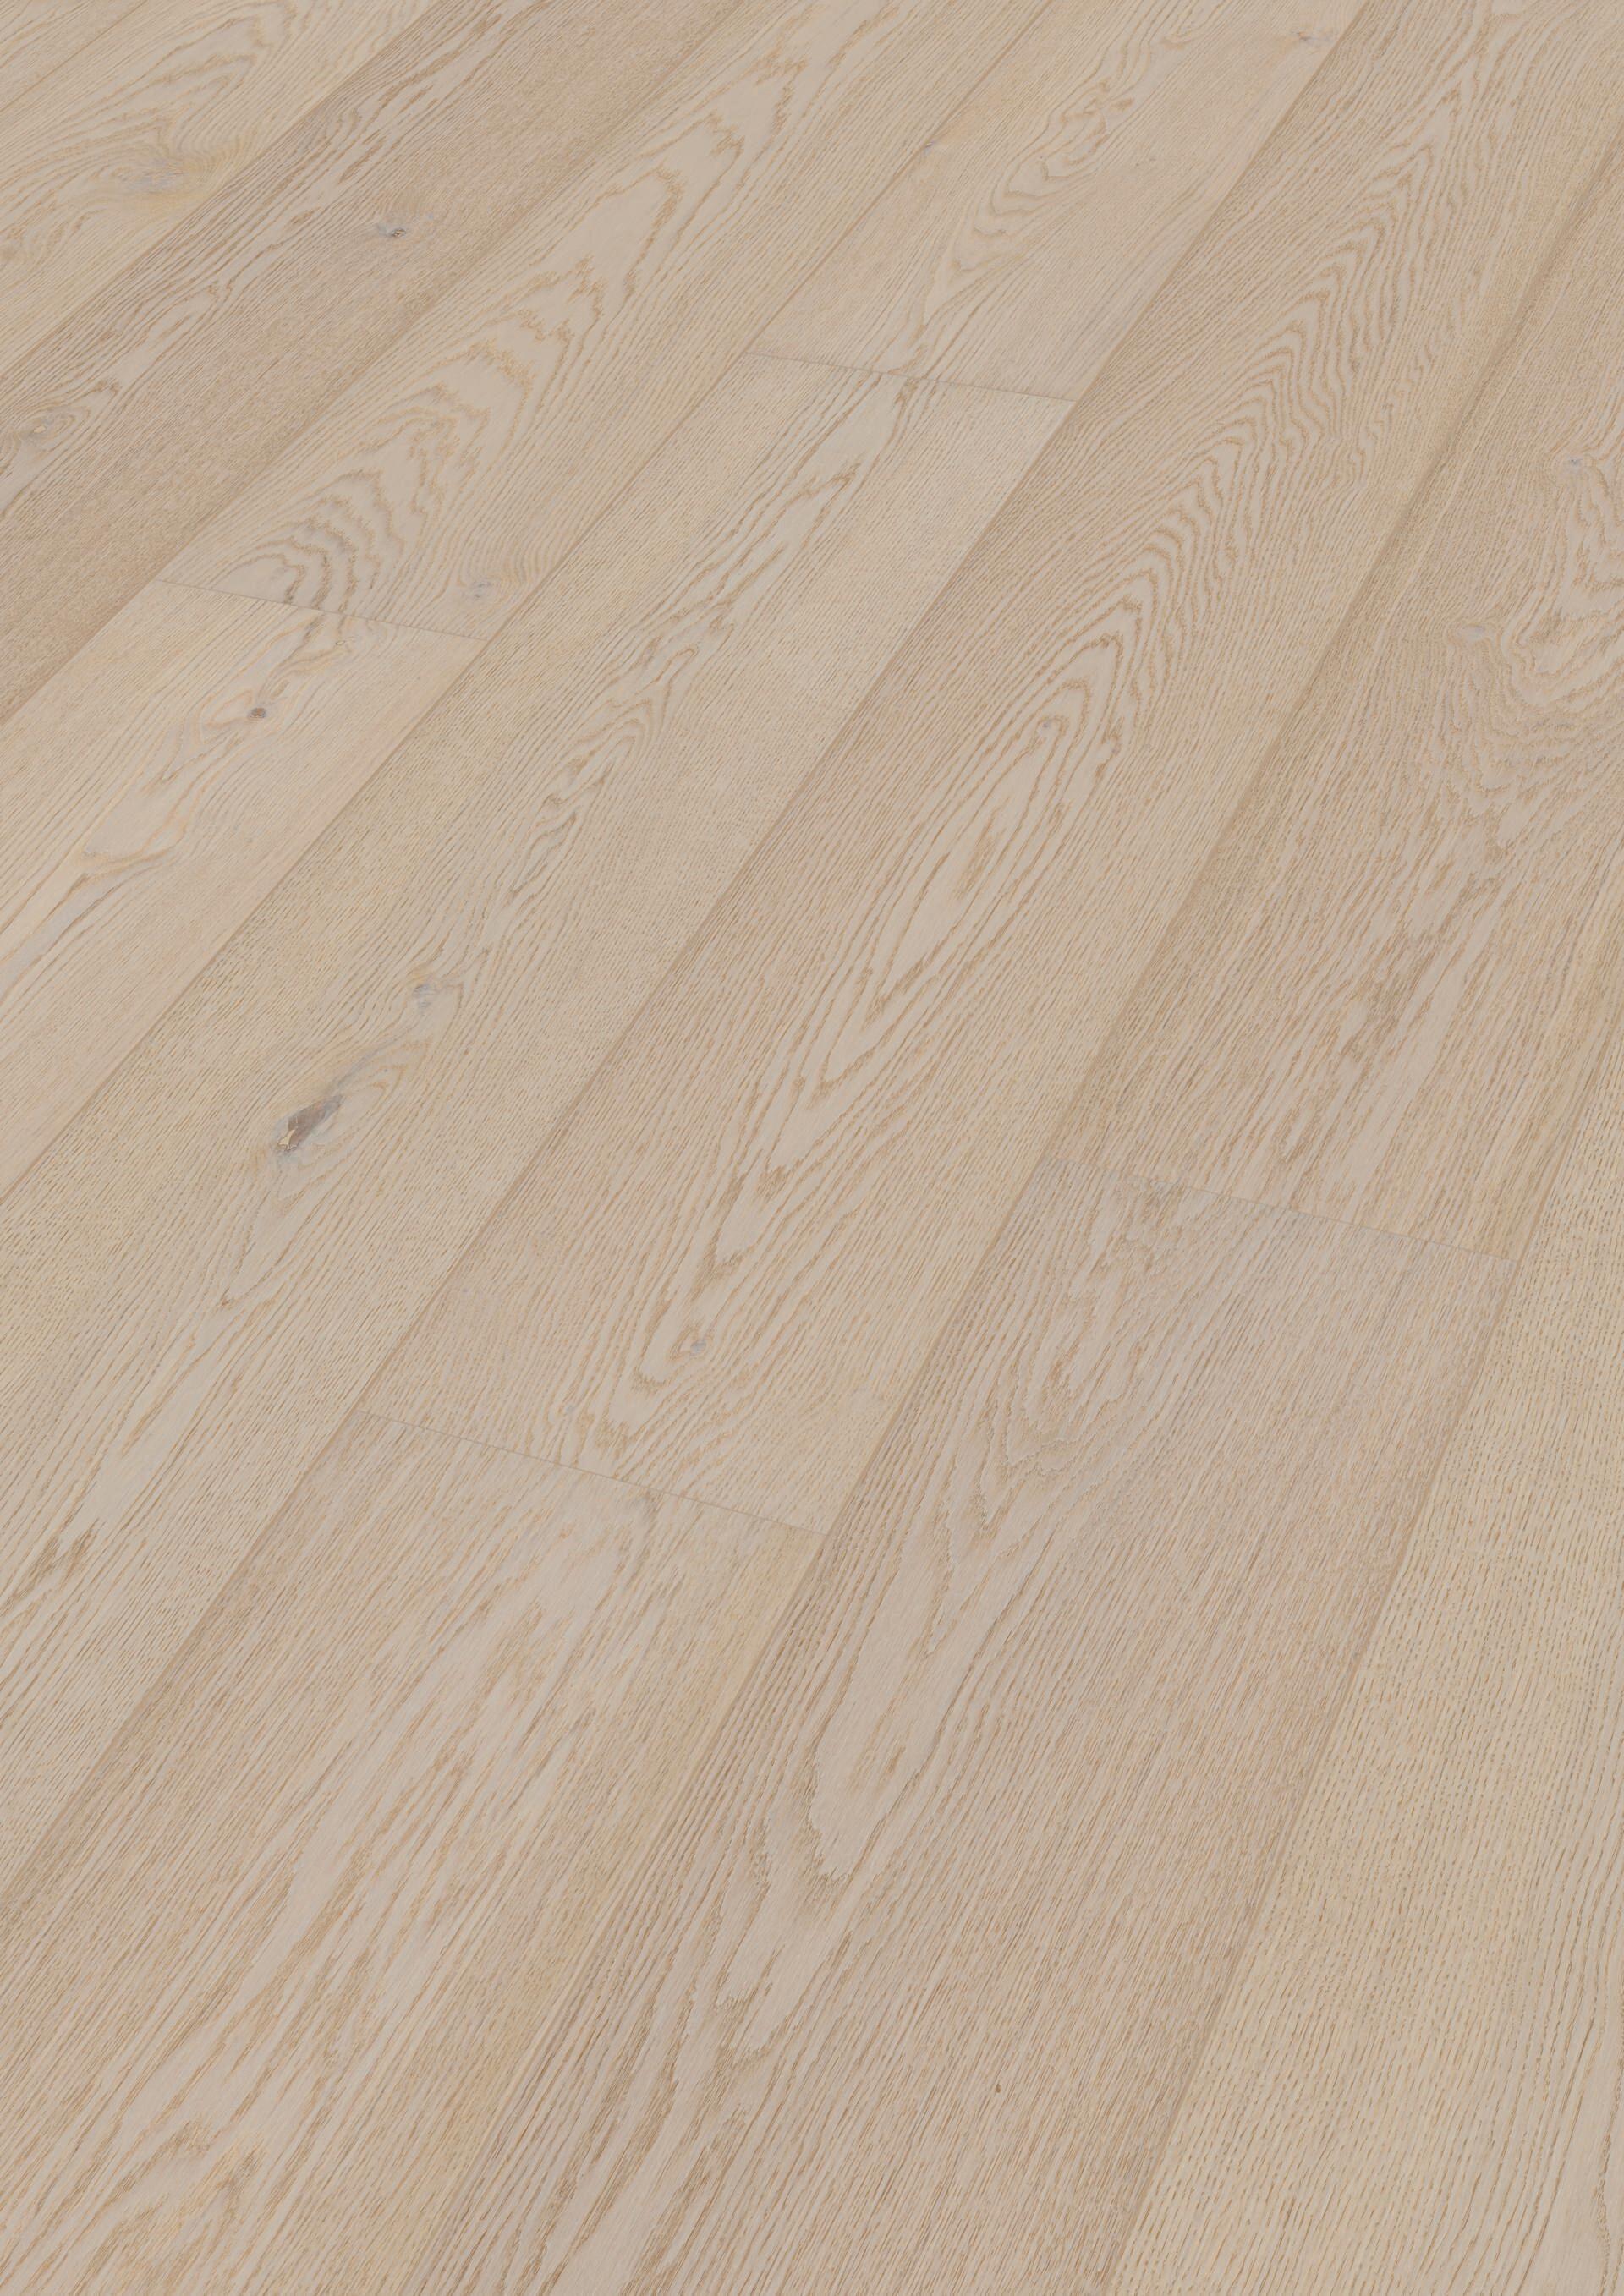 Natural Arctic White Oak 8735 Meister, Natural Oak Effect 3 Strip Laminate Flooring